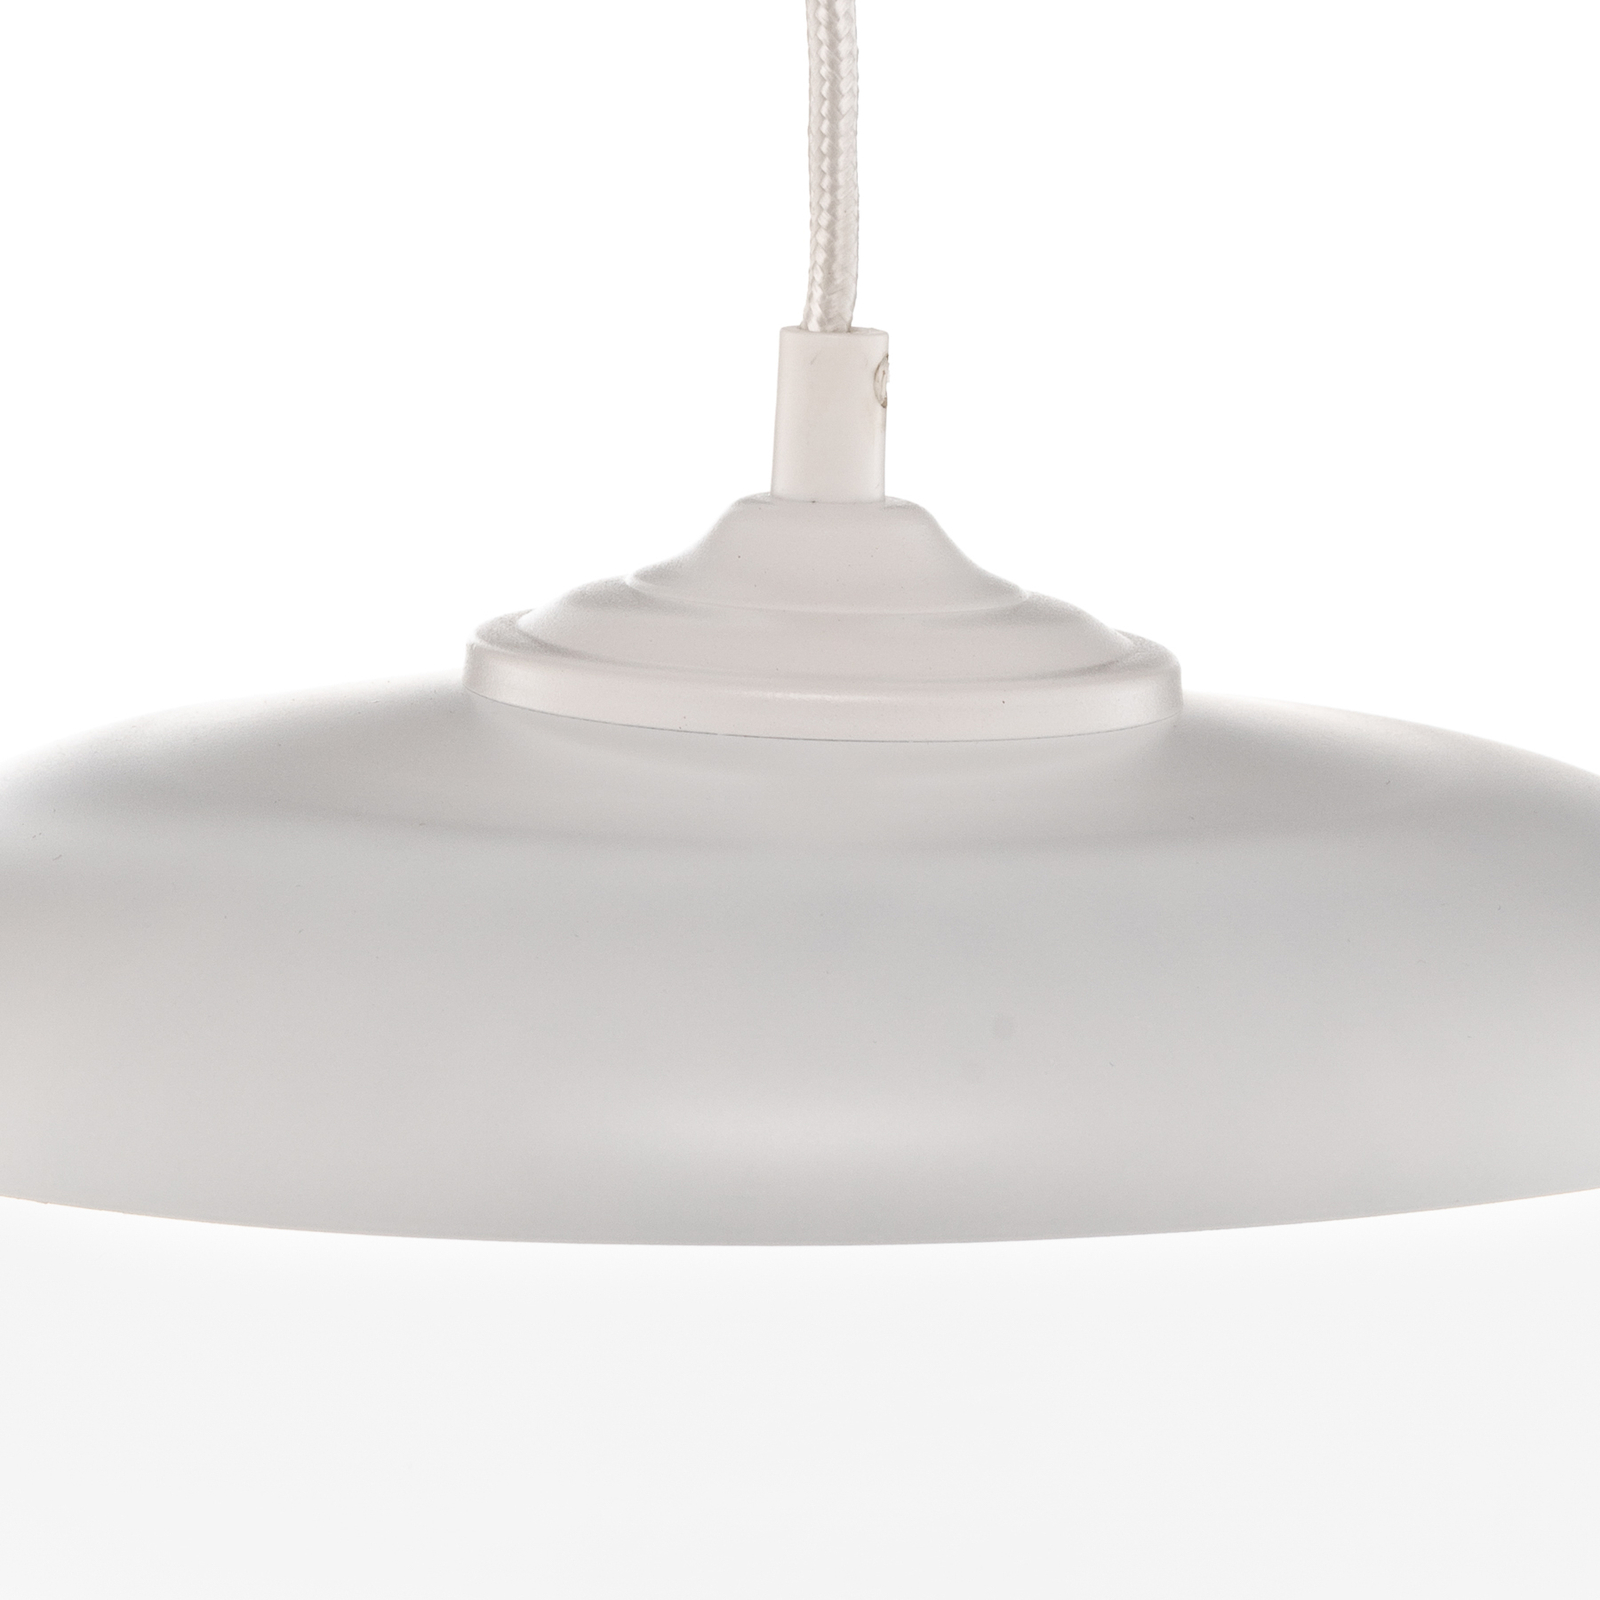 Hanglamp Monochrome Flash helder/wit Ø 25cm